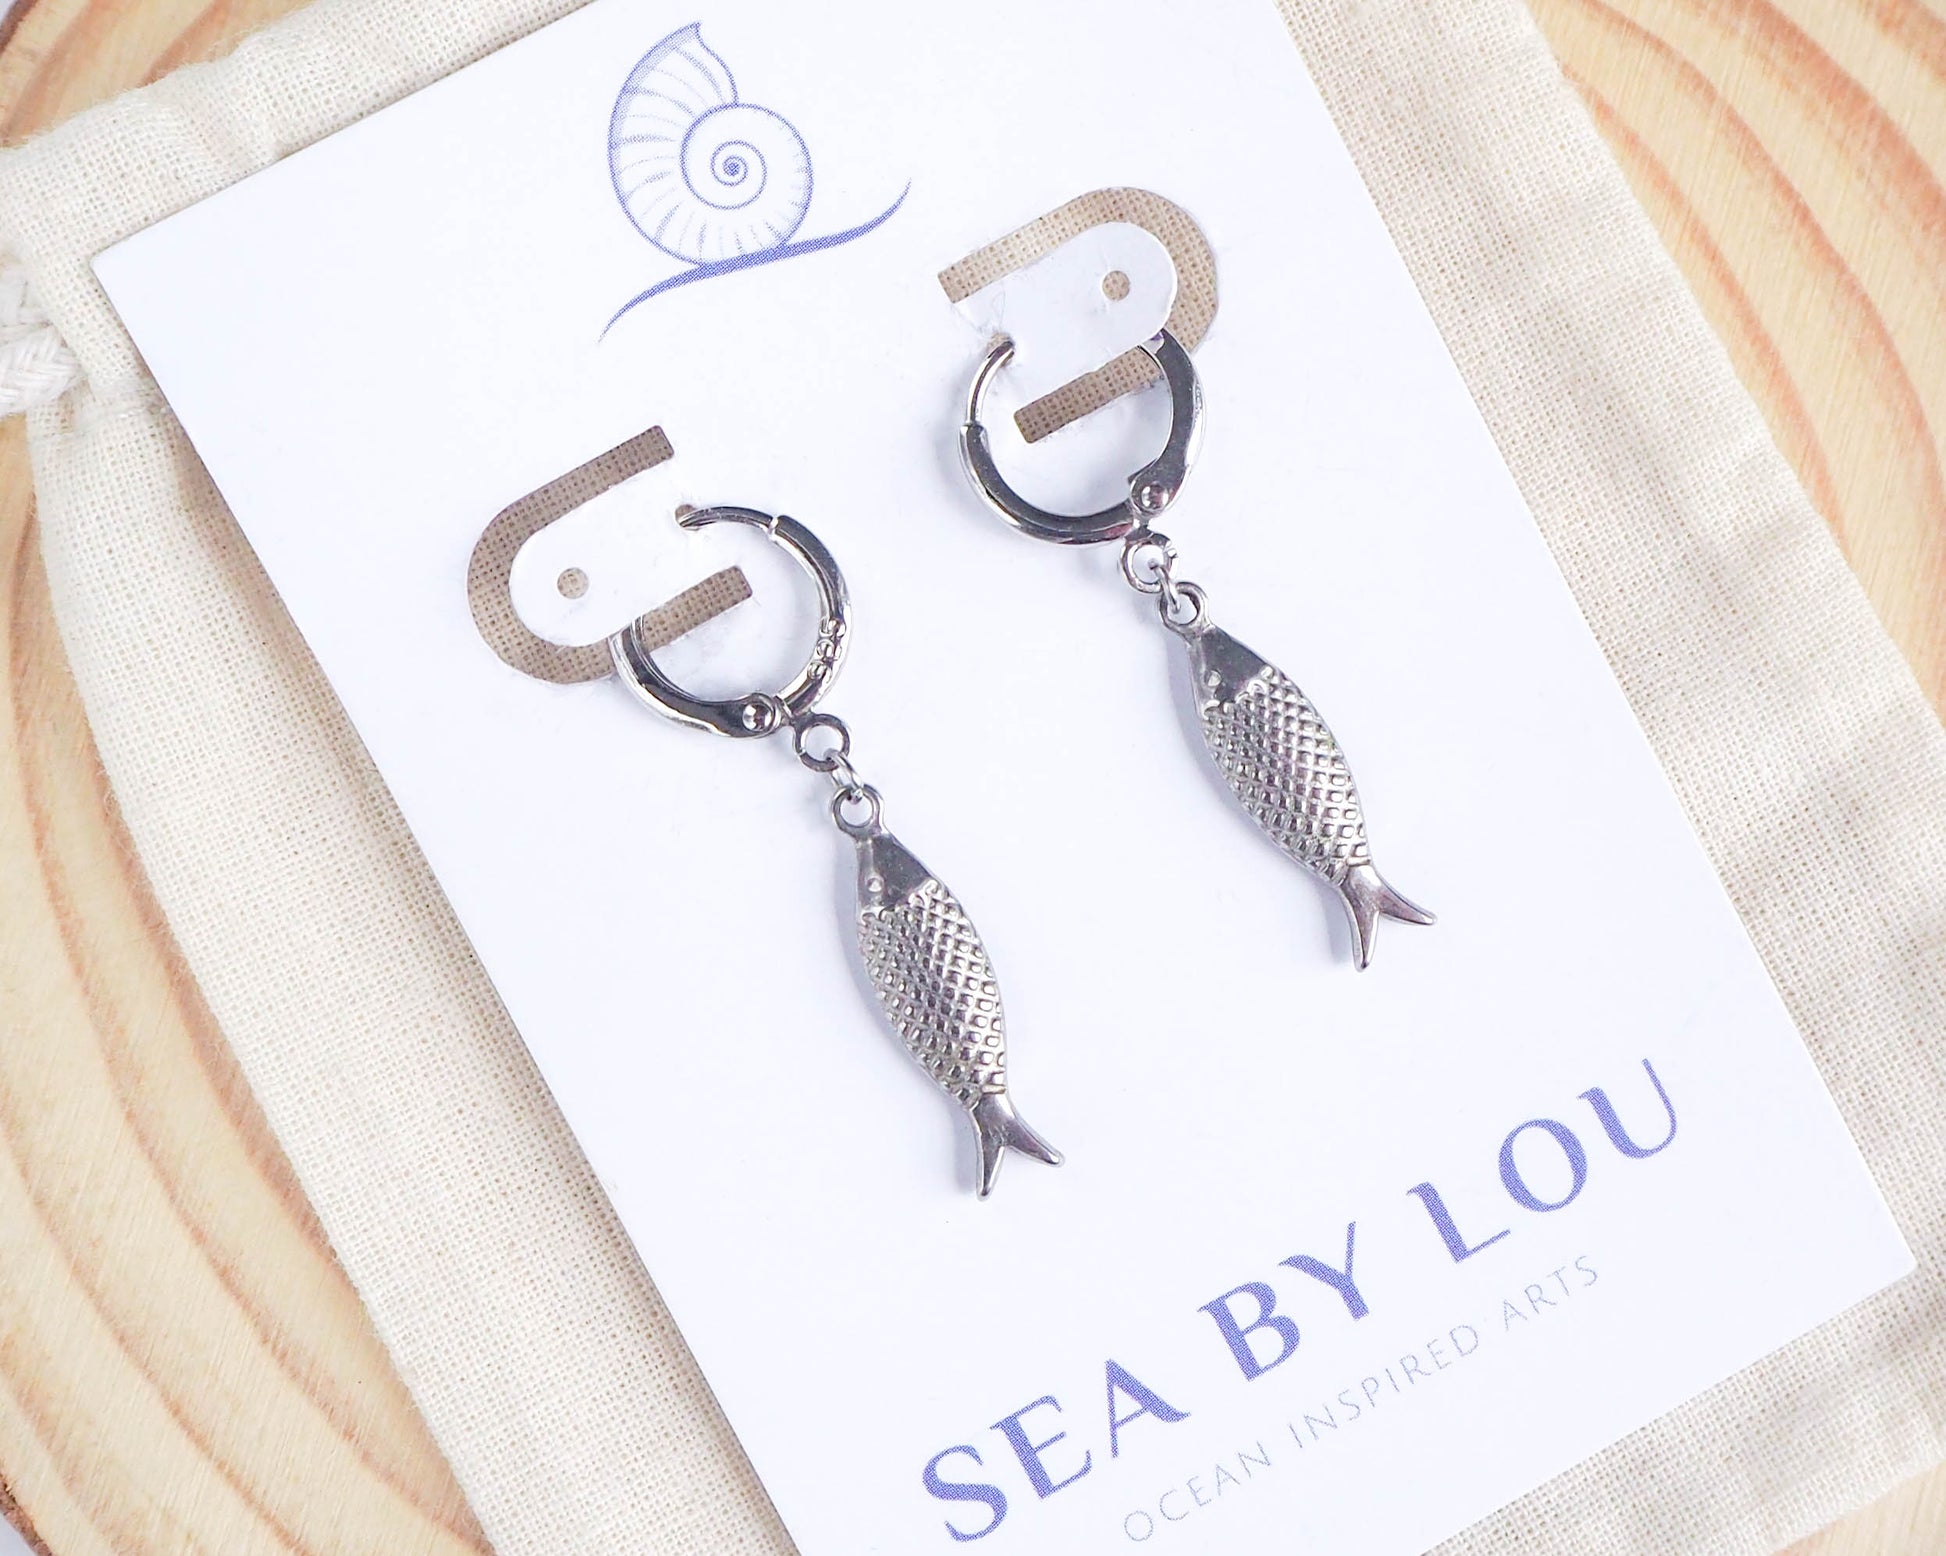 925 Sterling Silver Sardine Earrings - Coastal Jewelry from Portugal, seabylou, Sea by Lou, Fish earrings